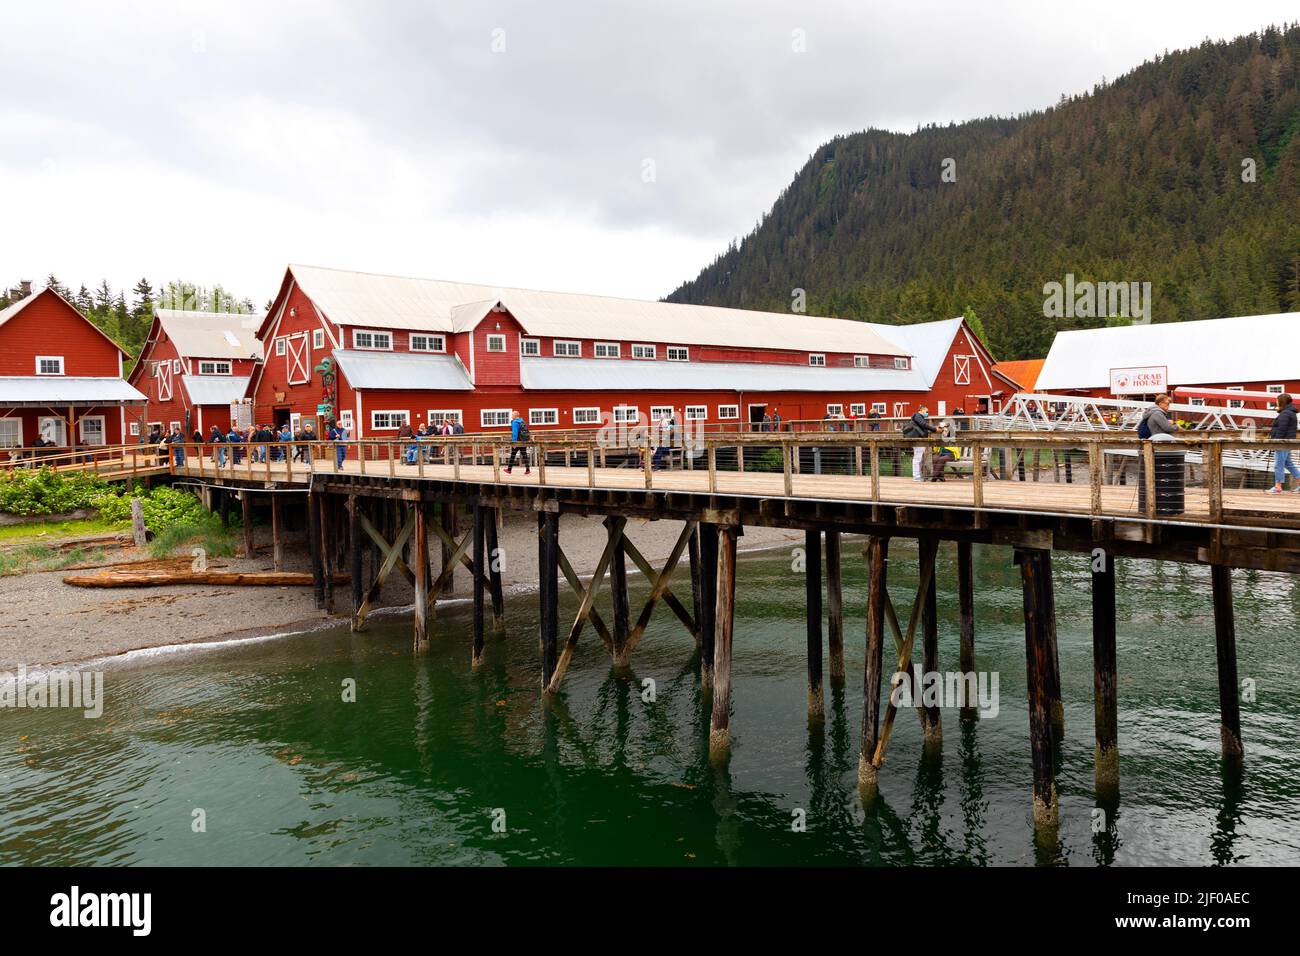 The Cannery on Icy Strait Point Hoonah Alaska Vereinigte Staaten von Amerika. Stockfoto